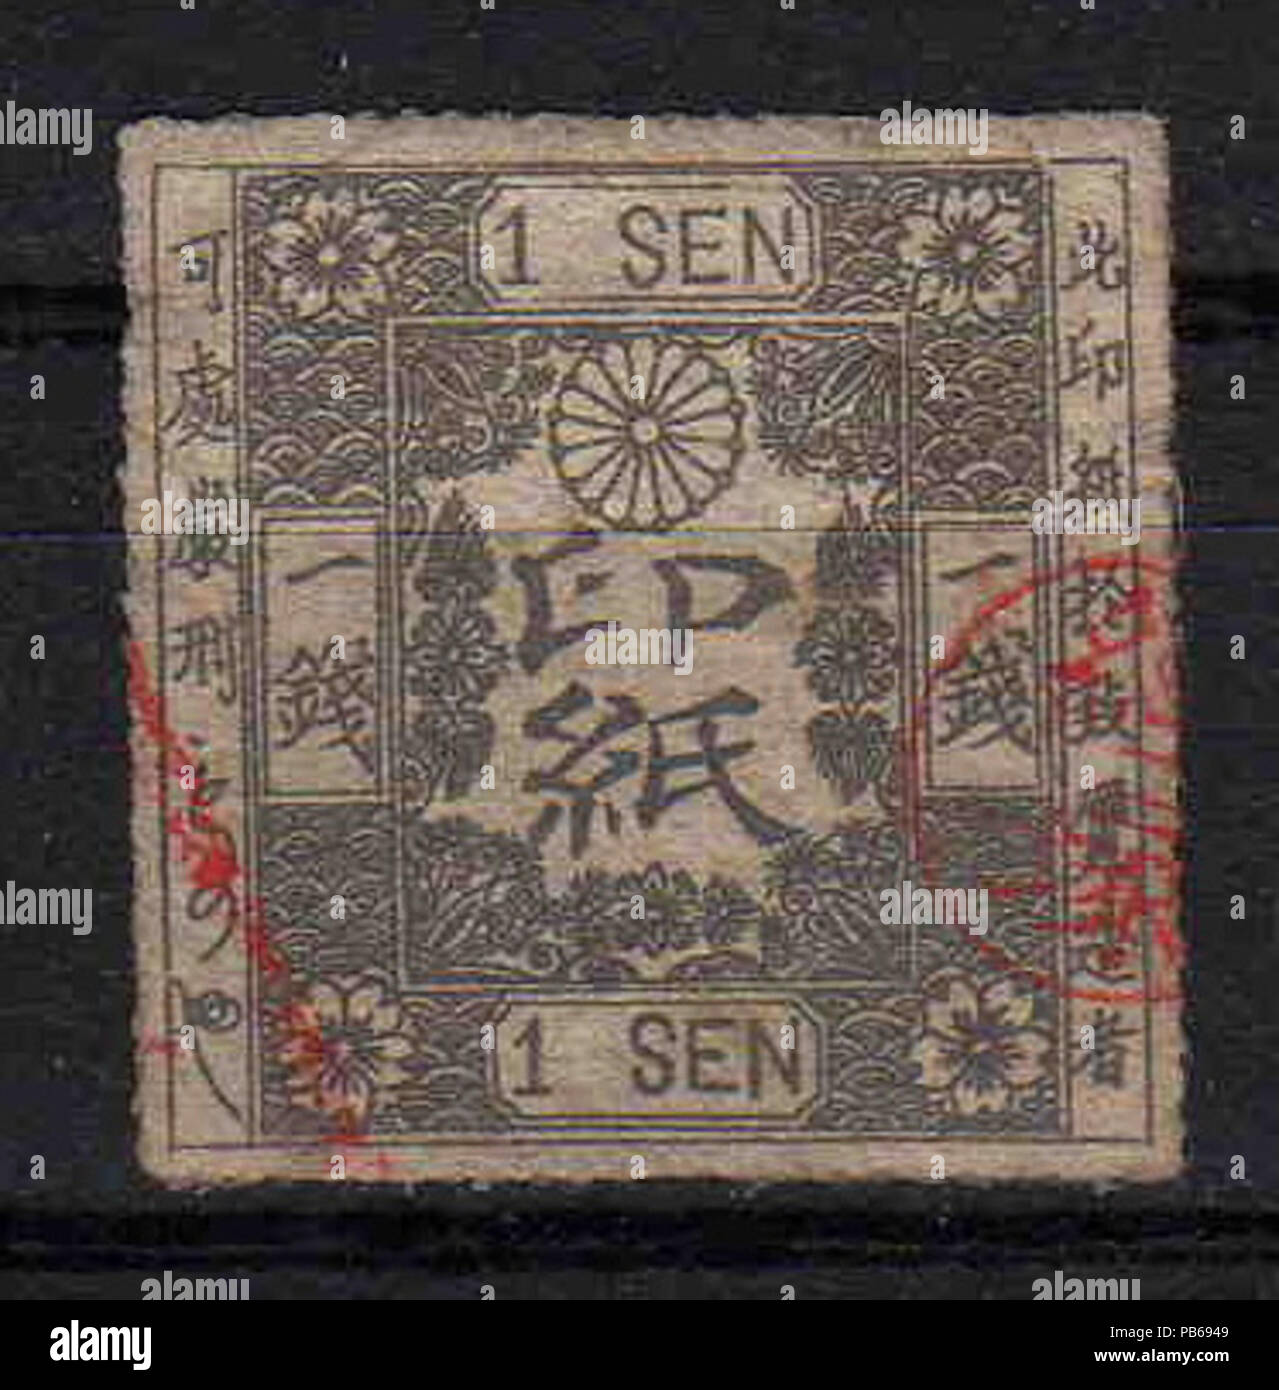 827 Japanese Revenue stamp 1sen Stock Photo